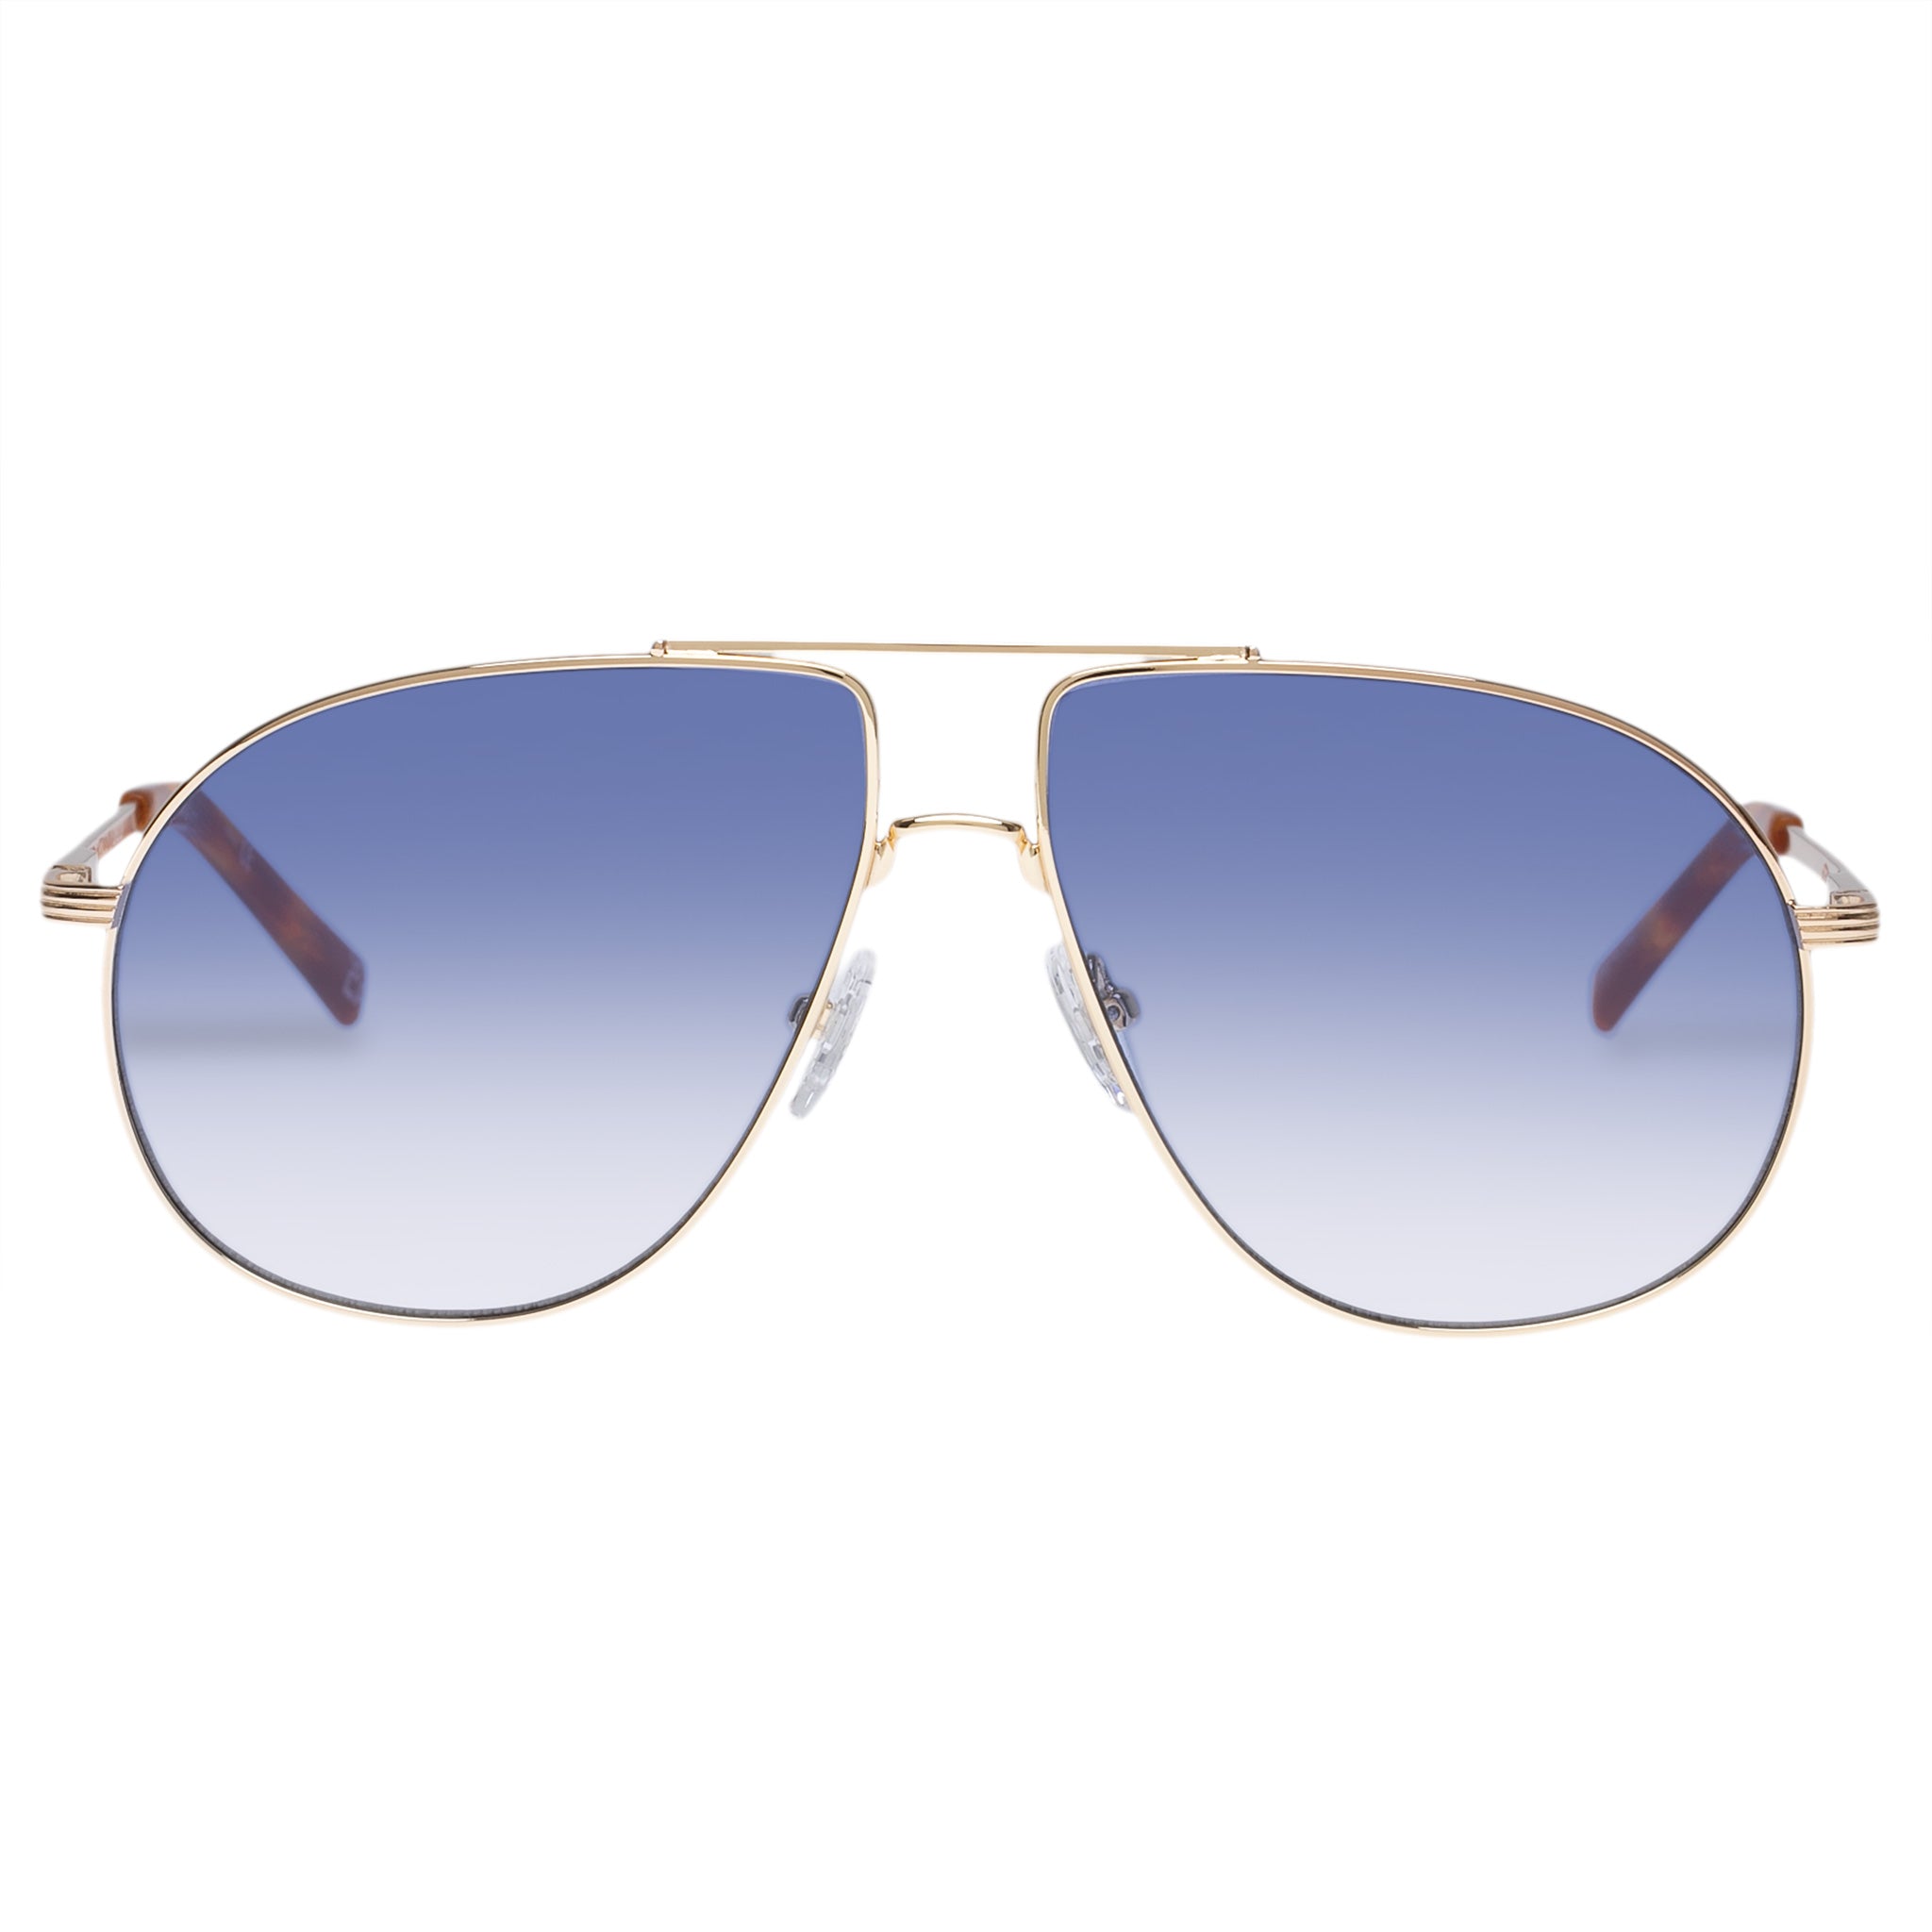 Le Specs Schmaltzy Bright Gold solbriller, Blue grad lens